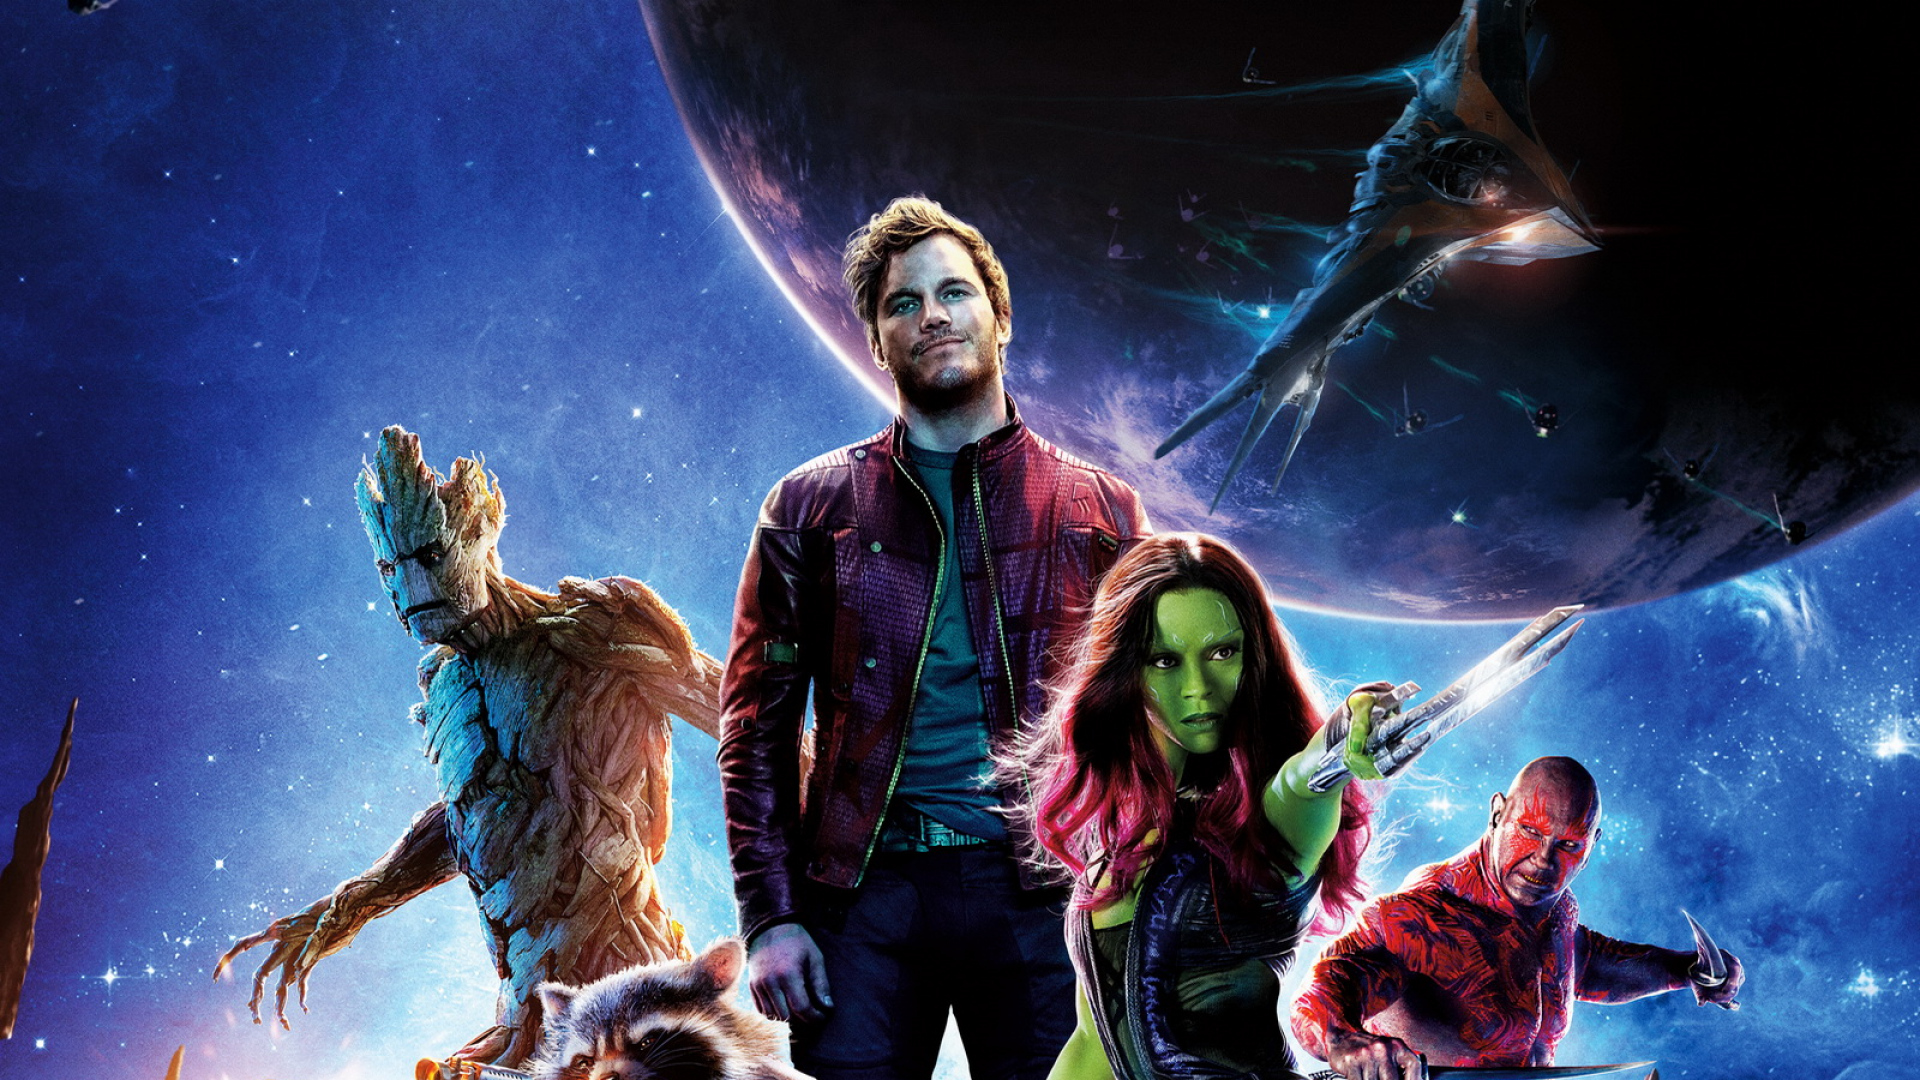 Chris Pratt In Guardians Of The Galaxy Poster - Chris Pratt - HD Wallpaper 